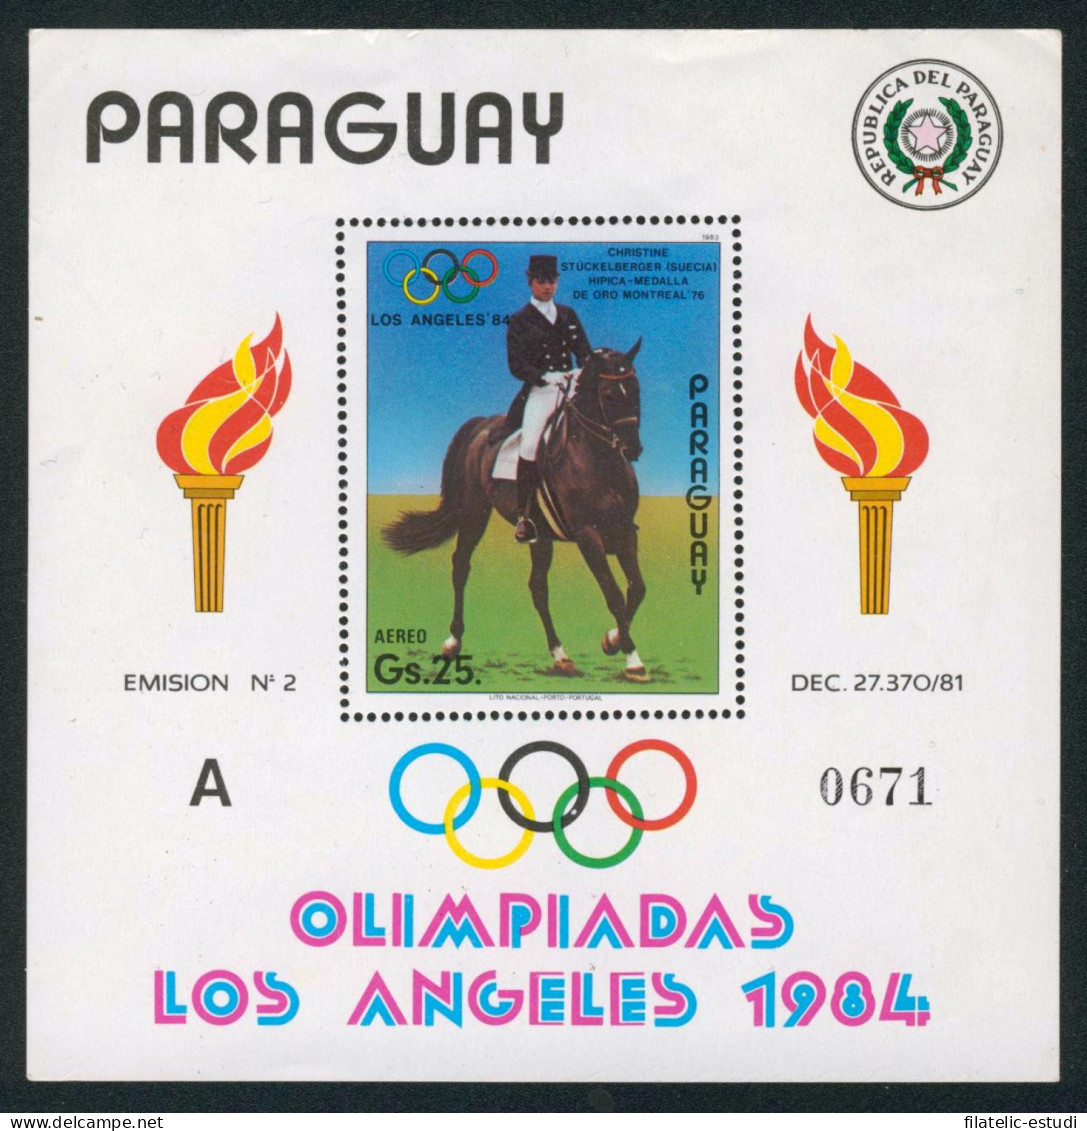 OLI1 Paraguay  HB 395  1984  JJOO Los Angeles  MNH - Paraguay